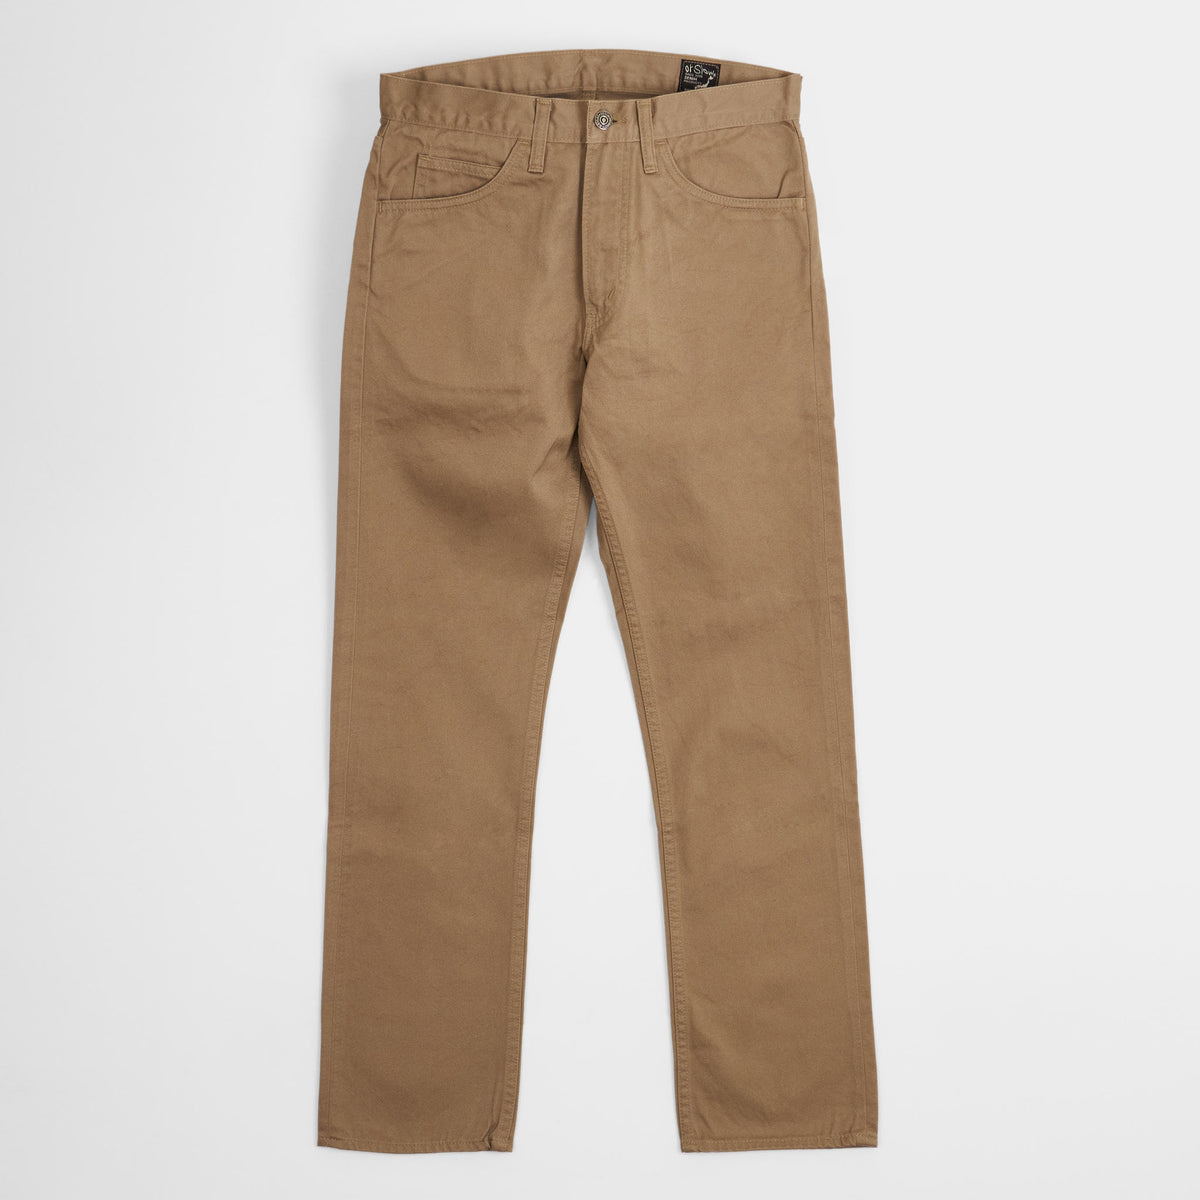 OrSlow Slim FIt 5 Pocket Twill Jeans